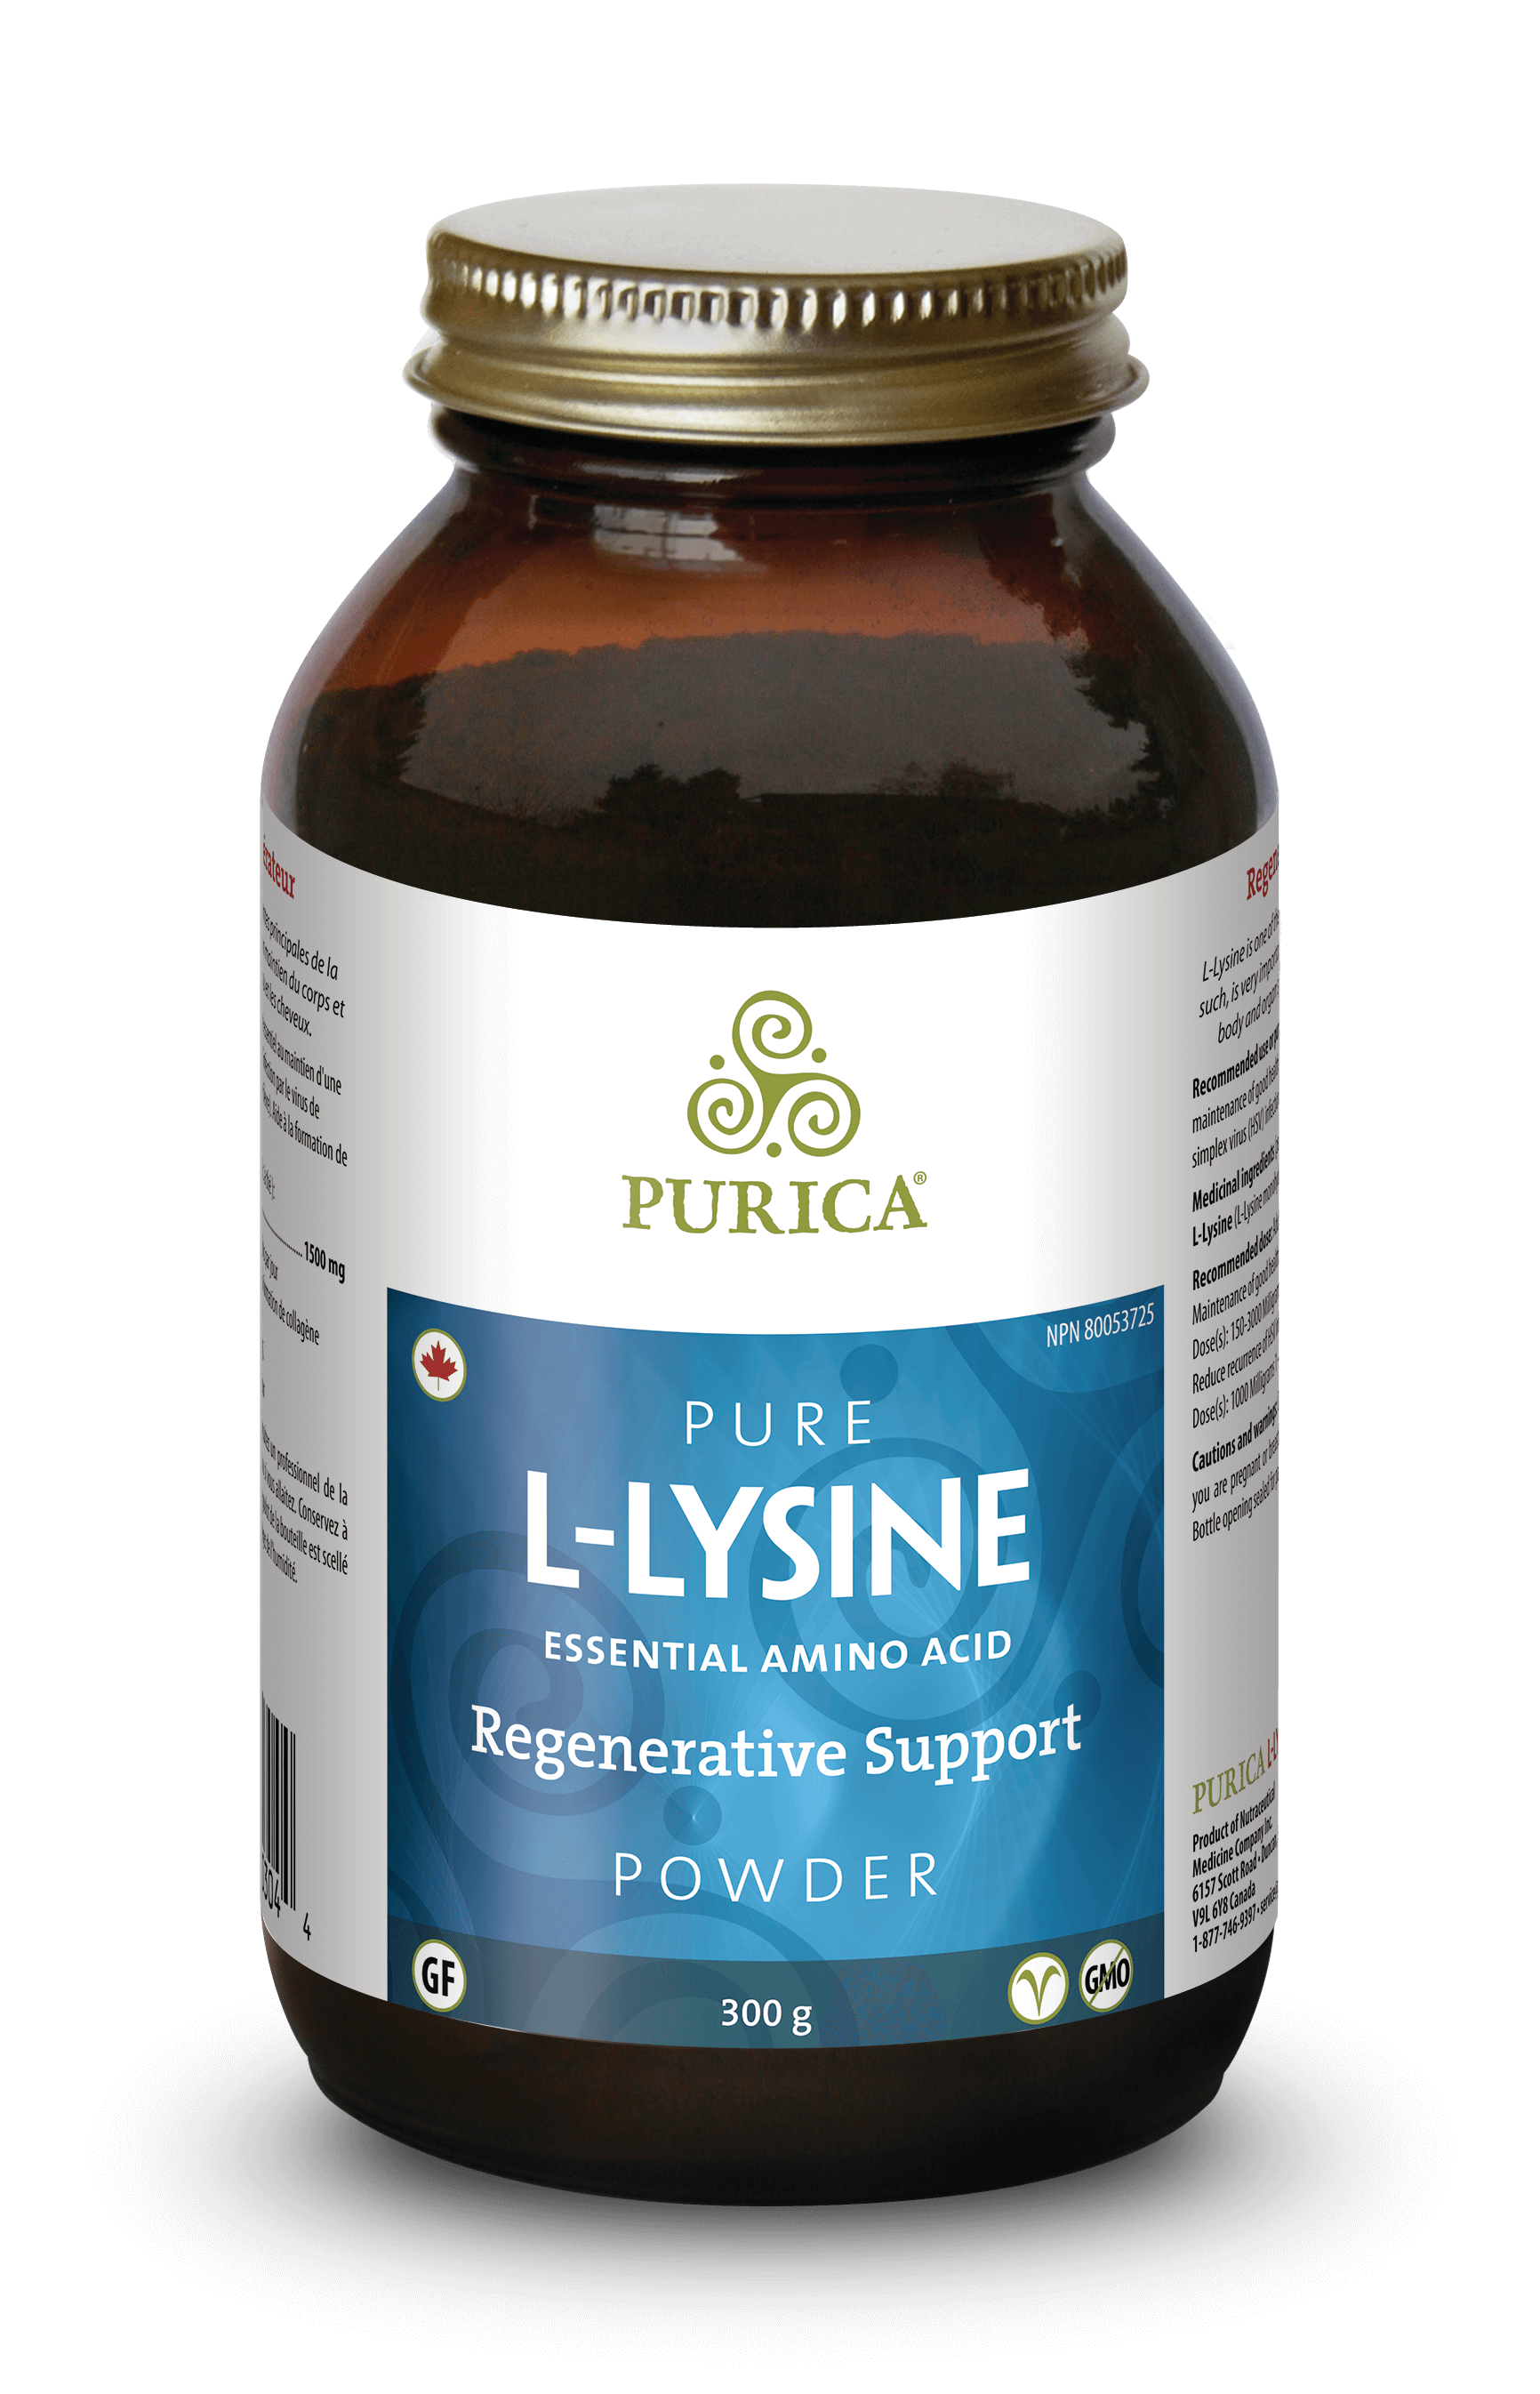 Purica Pure L-Lysine Powder (300g) - Lifestyle Markets